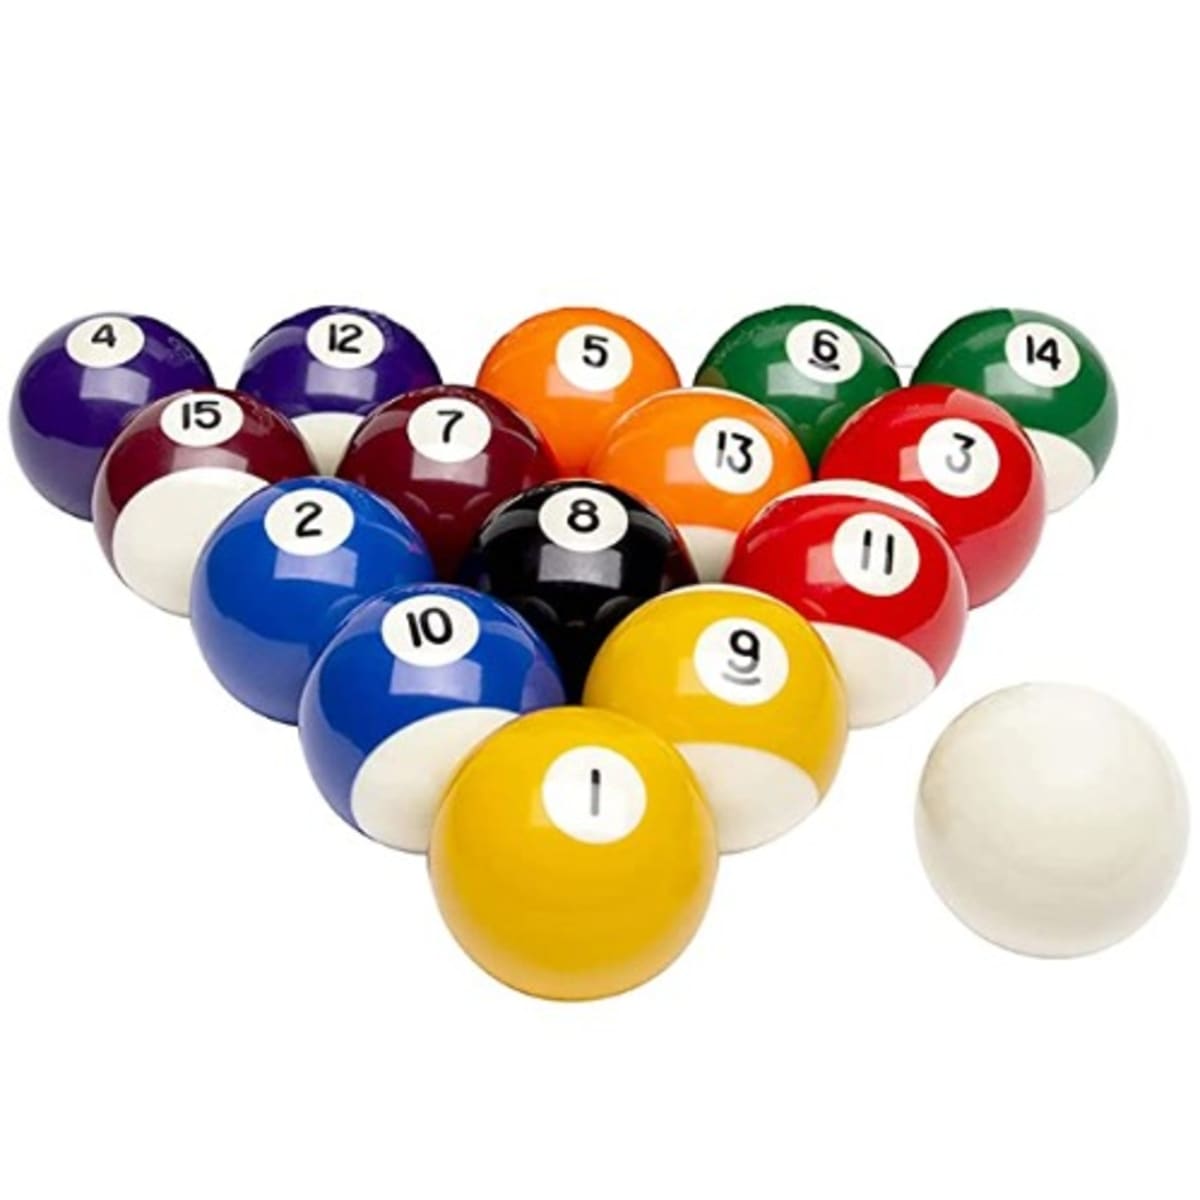 Snooker Ball- 16 Balls Konga Online Shopping